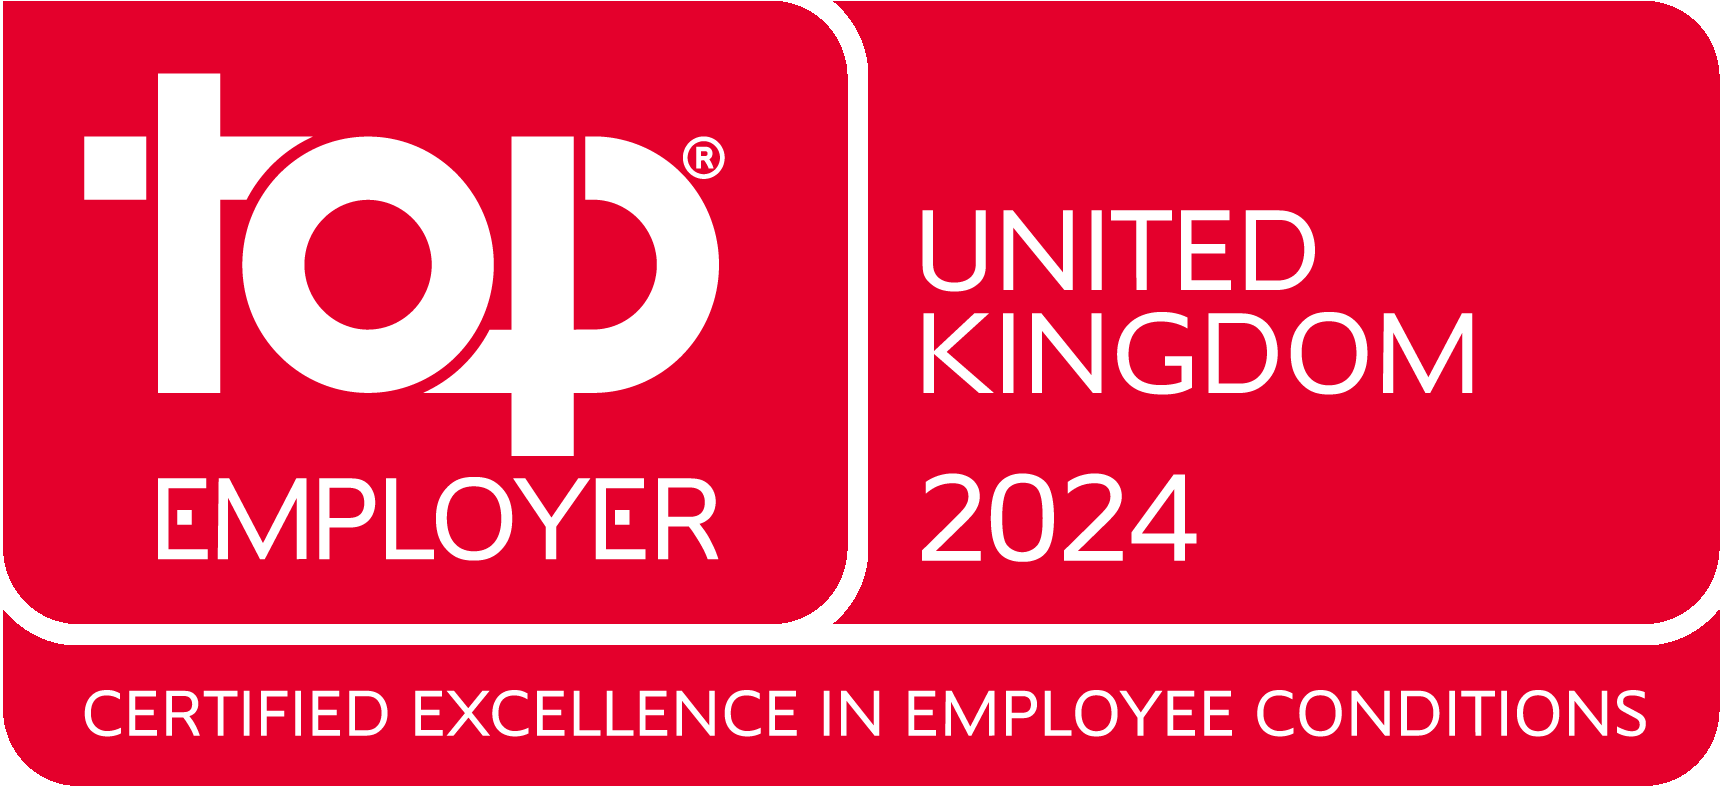 Top-Employer-United-Kingdom-2024 logo